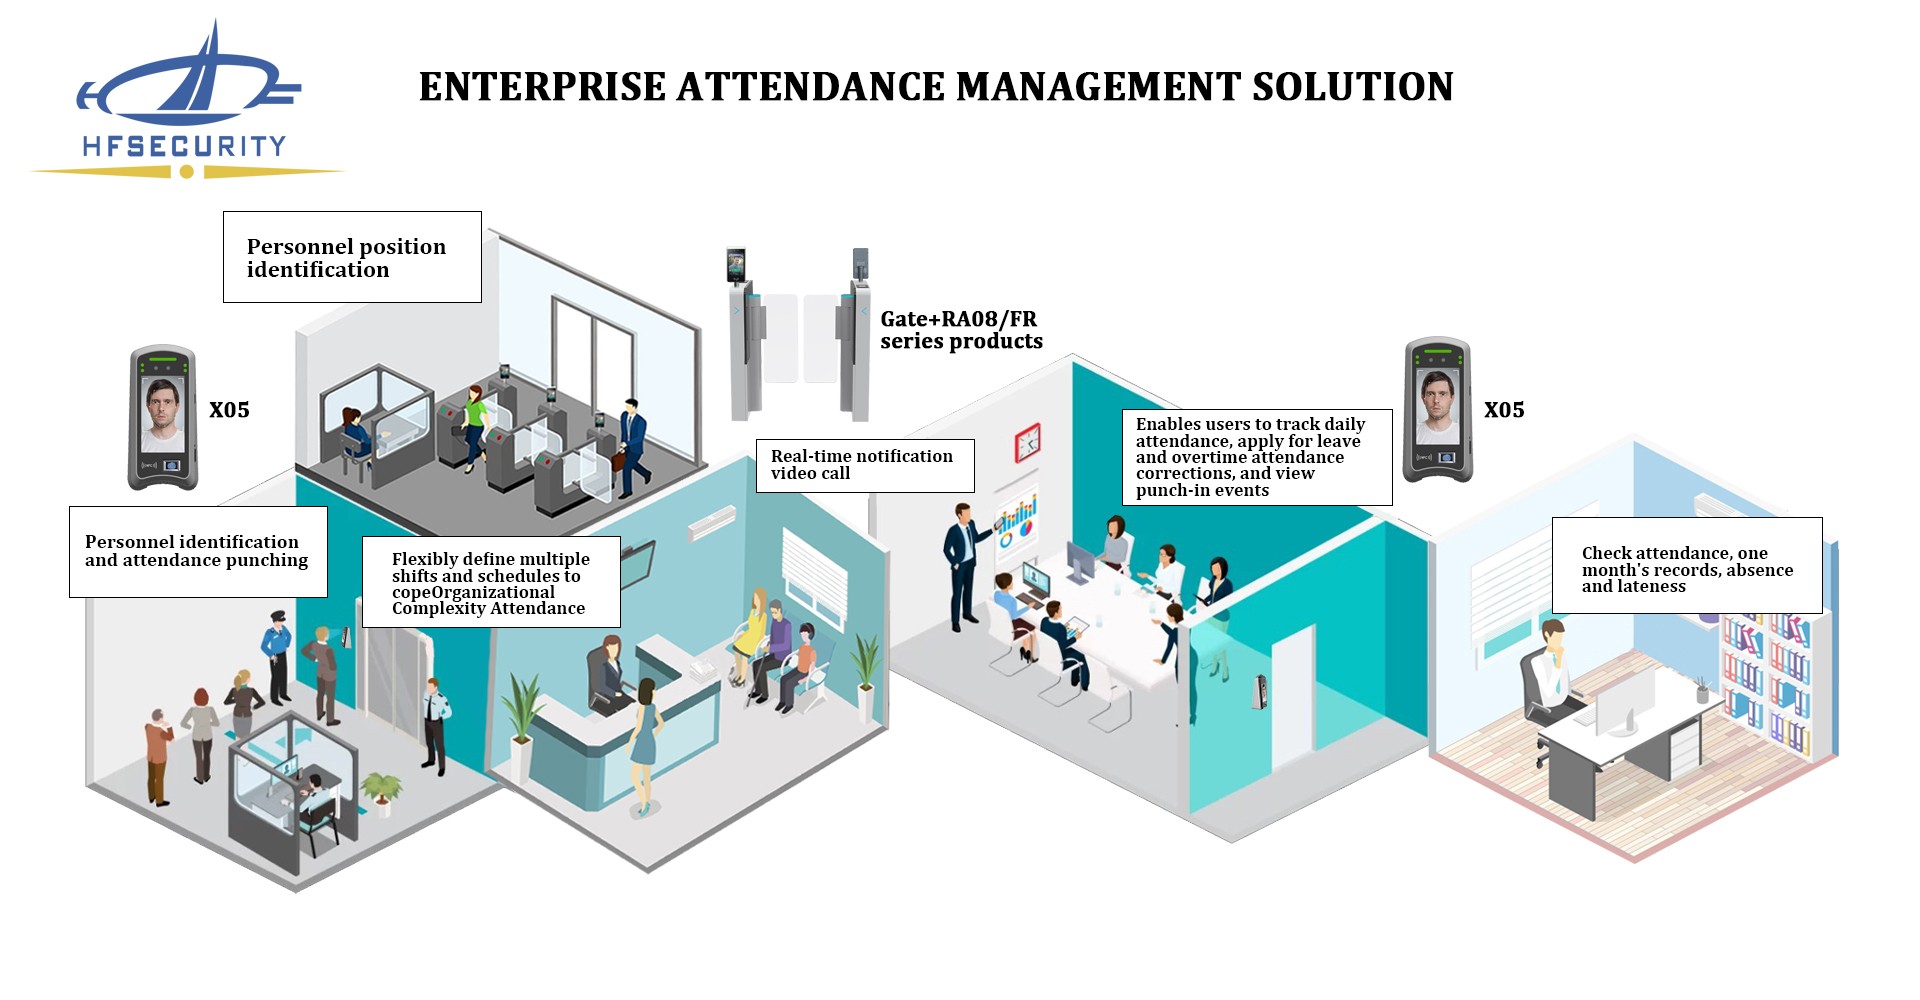 Enterprise attendance management